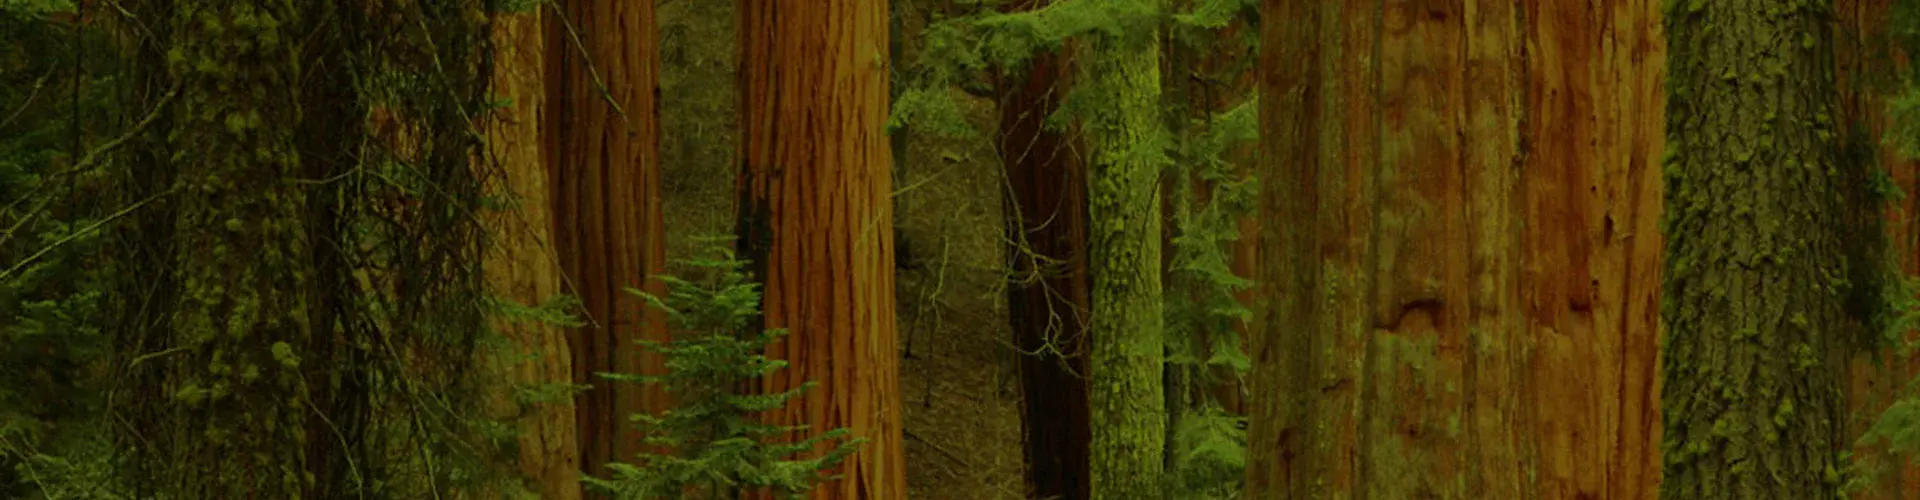 Giant Sequoia Trees (Credit: Ioannis Daglis, distributed via imaggeo.egu.eu)